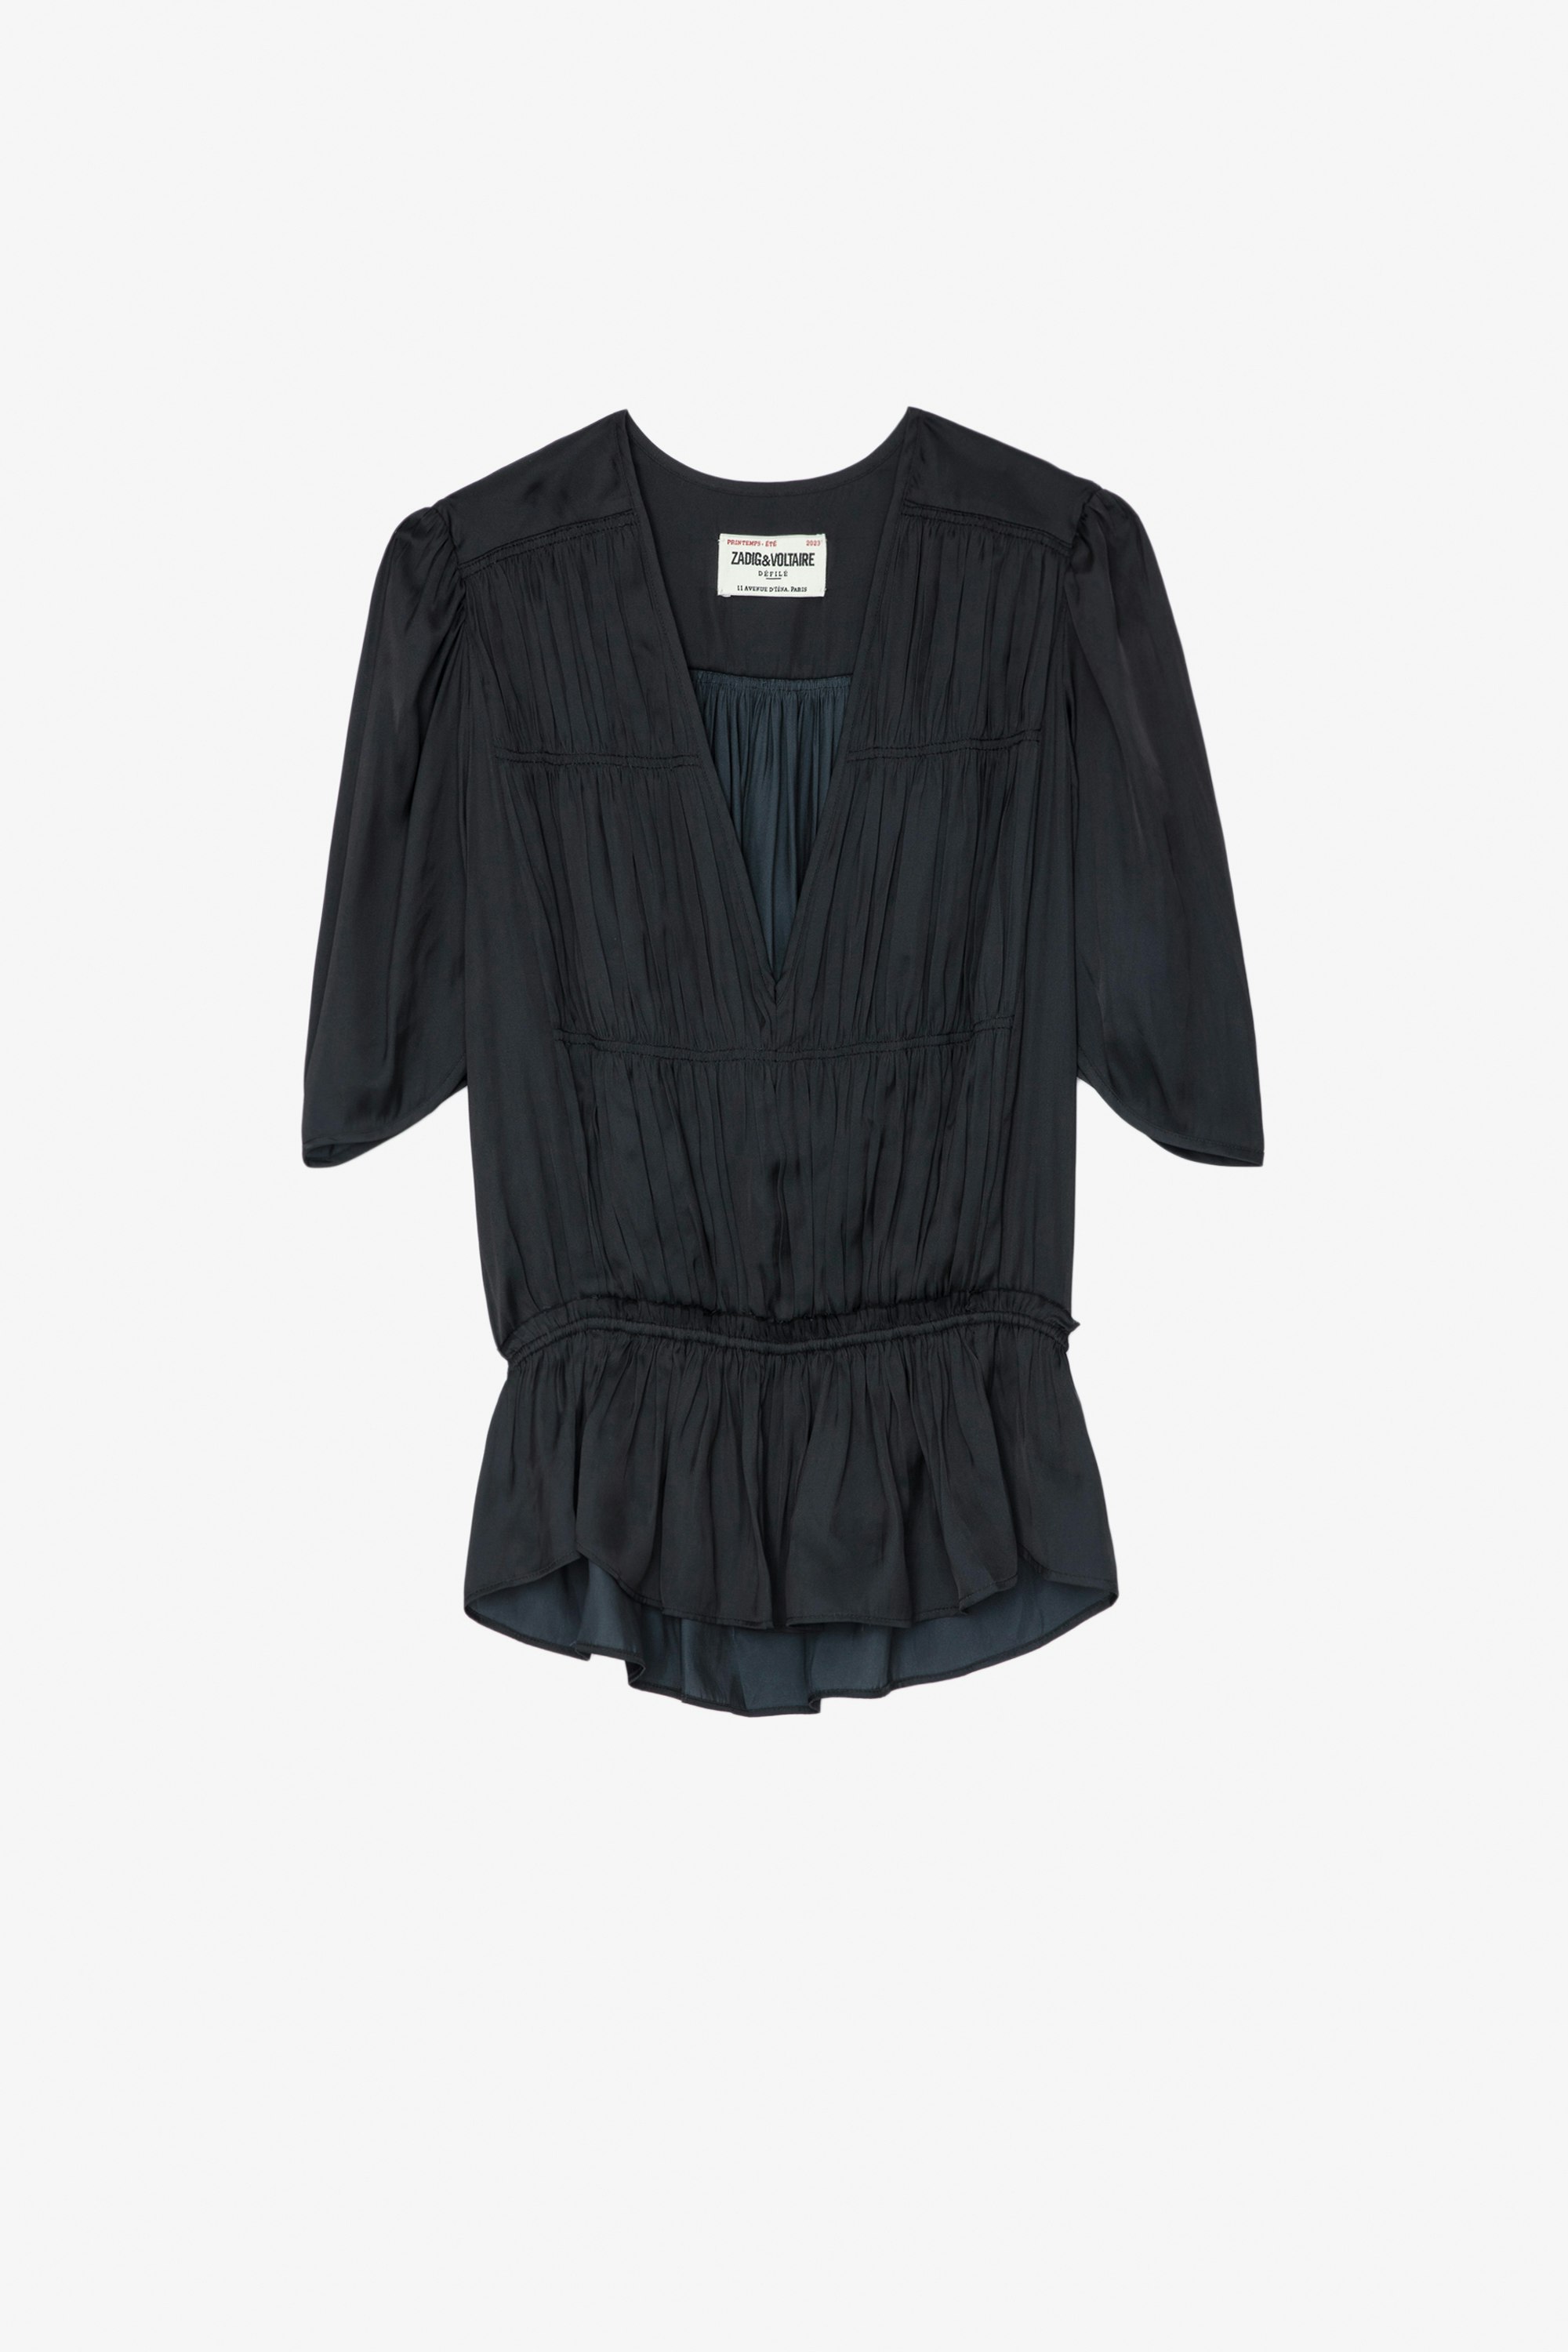 Tyoko Satin Top Women's gathered black satin top with asymmetrical sleeves